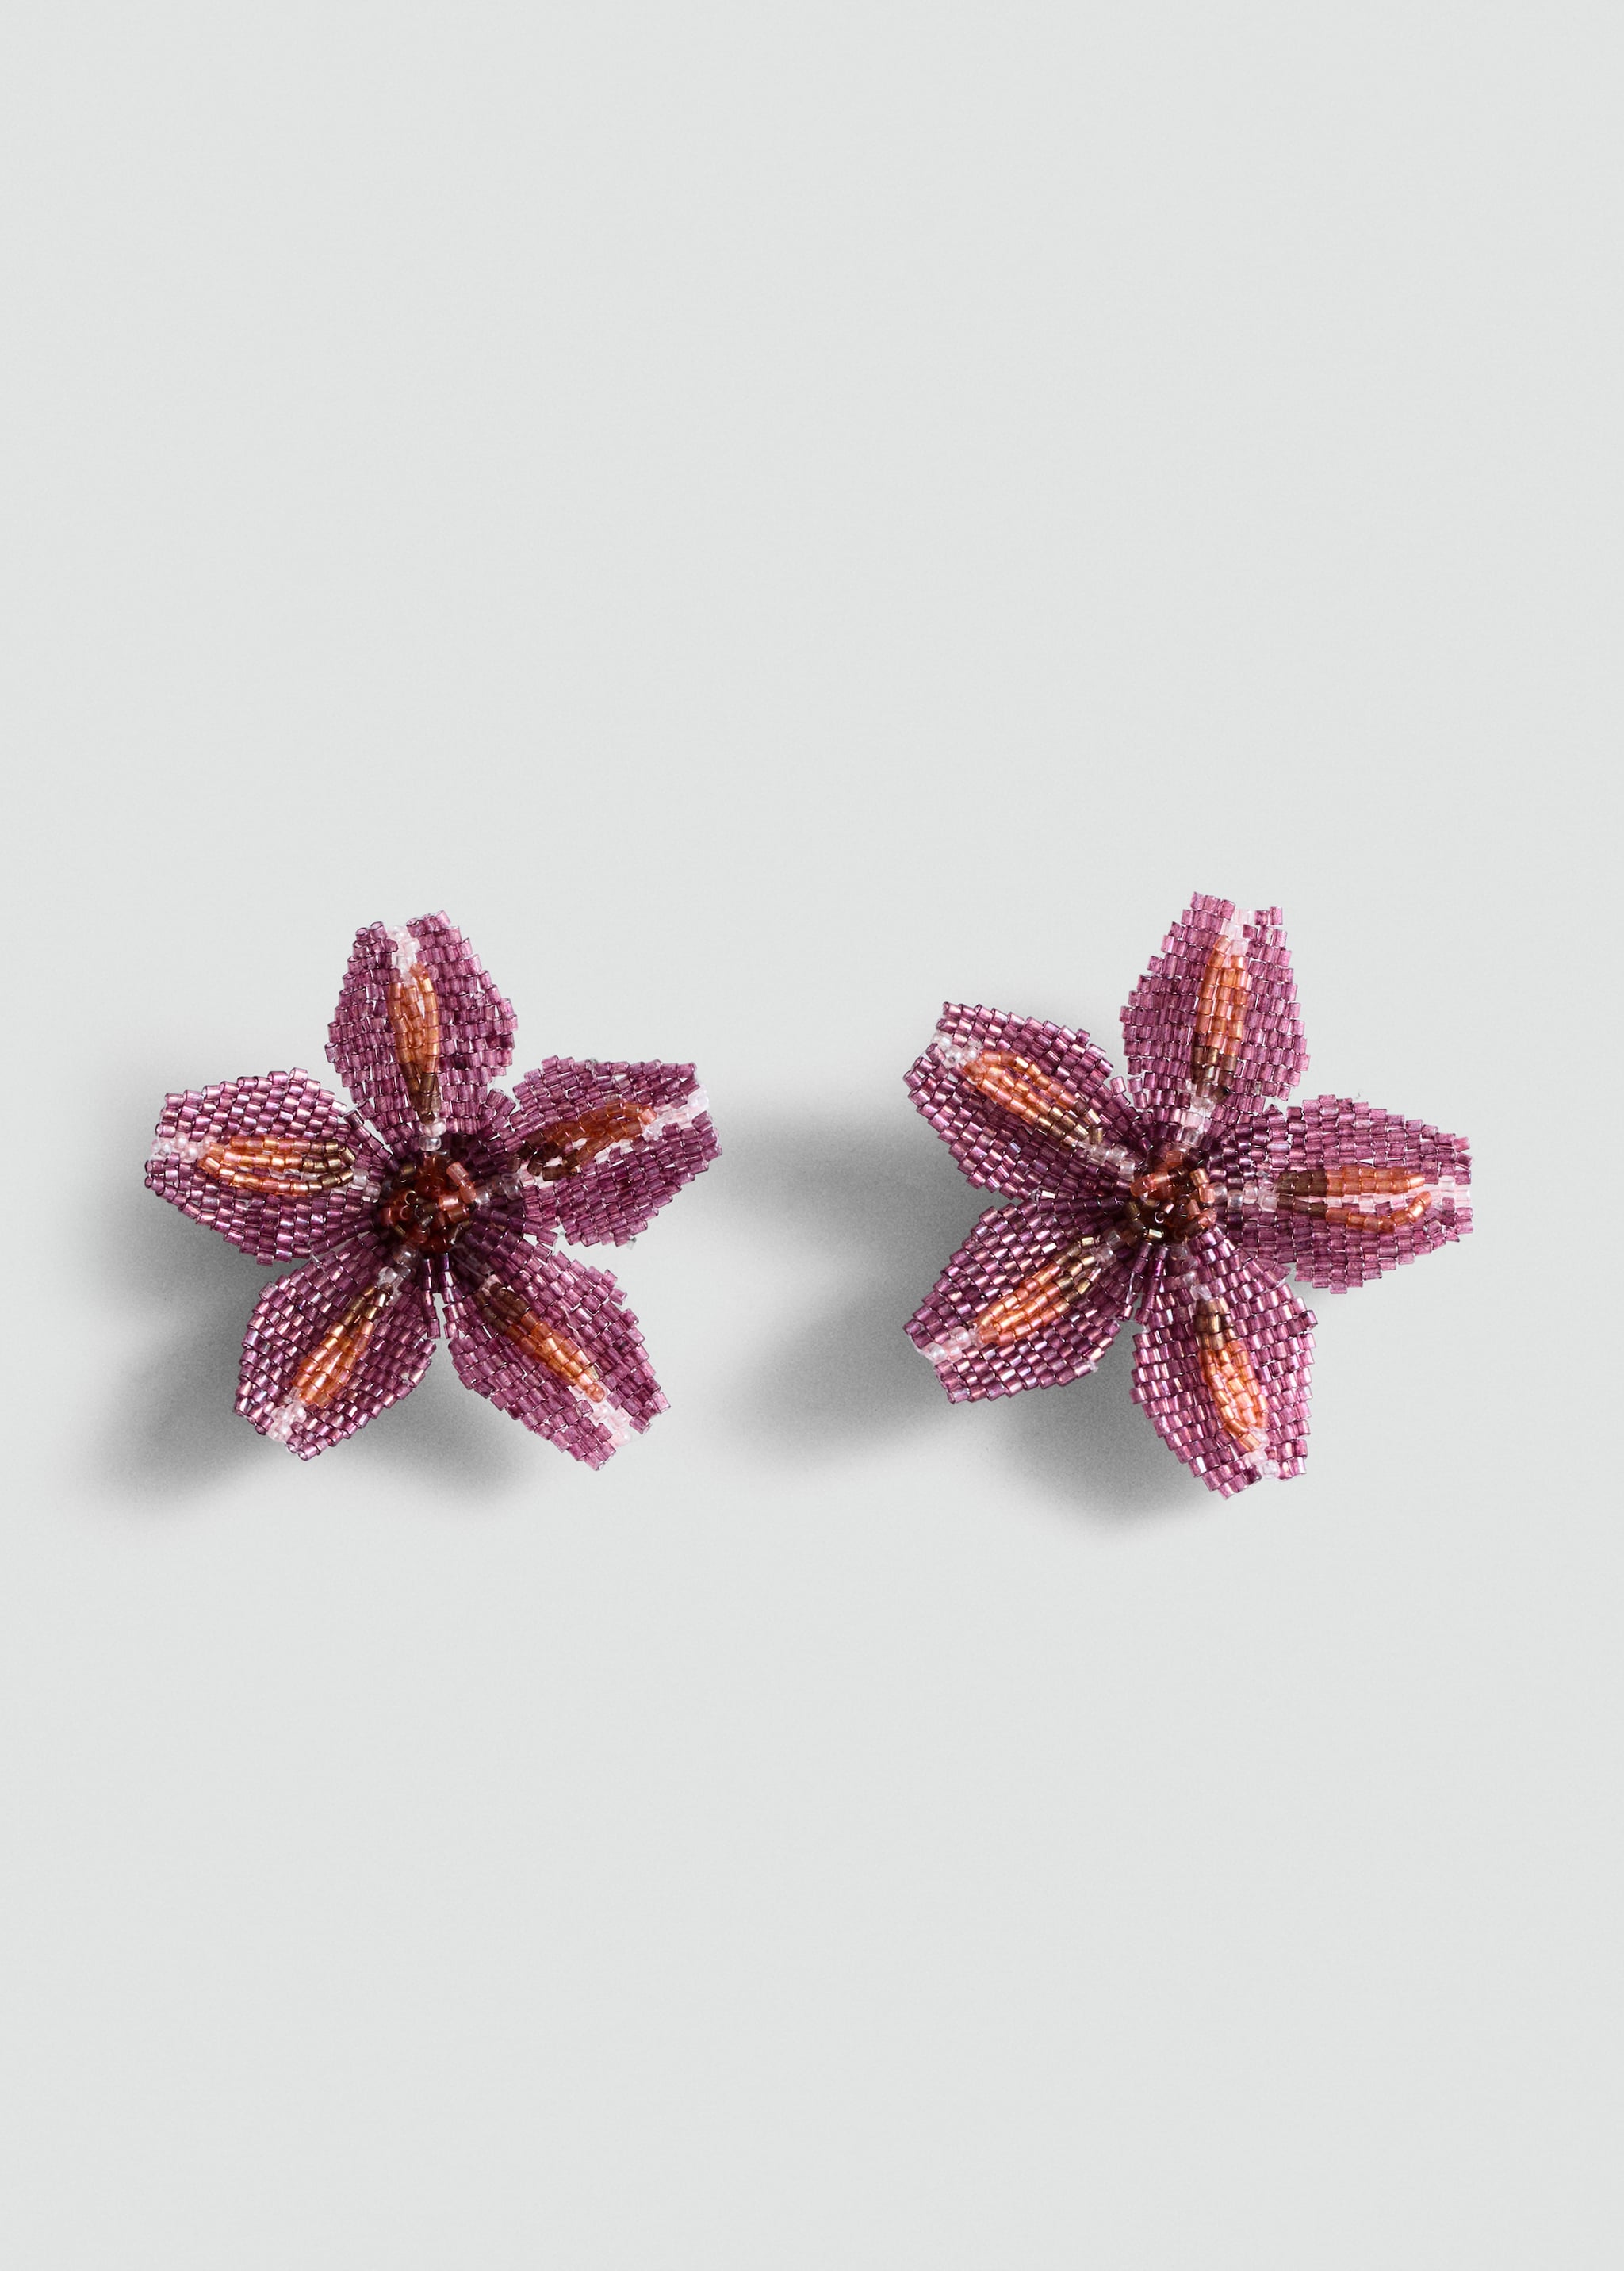 Crystal flower earrings - Artigo sem modelo